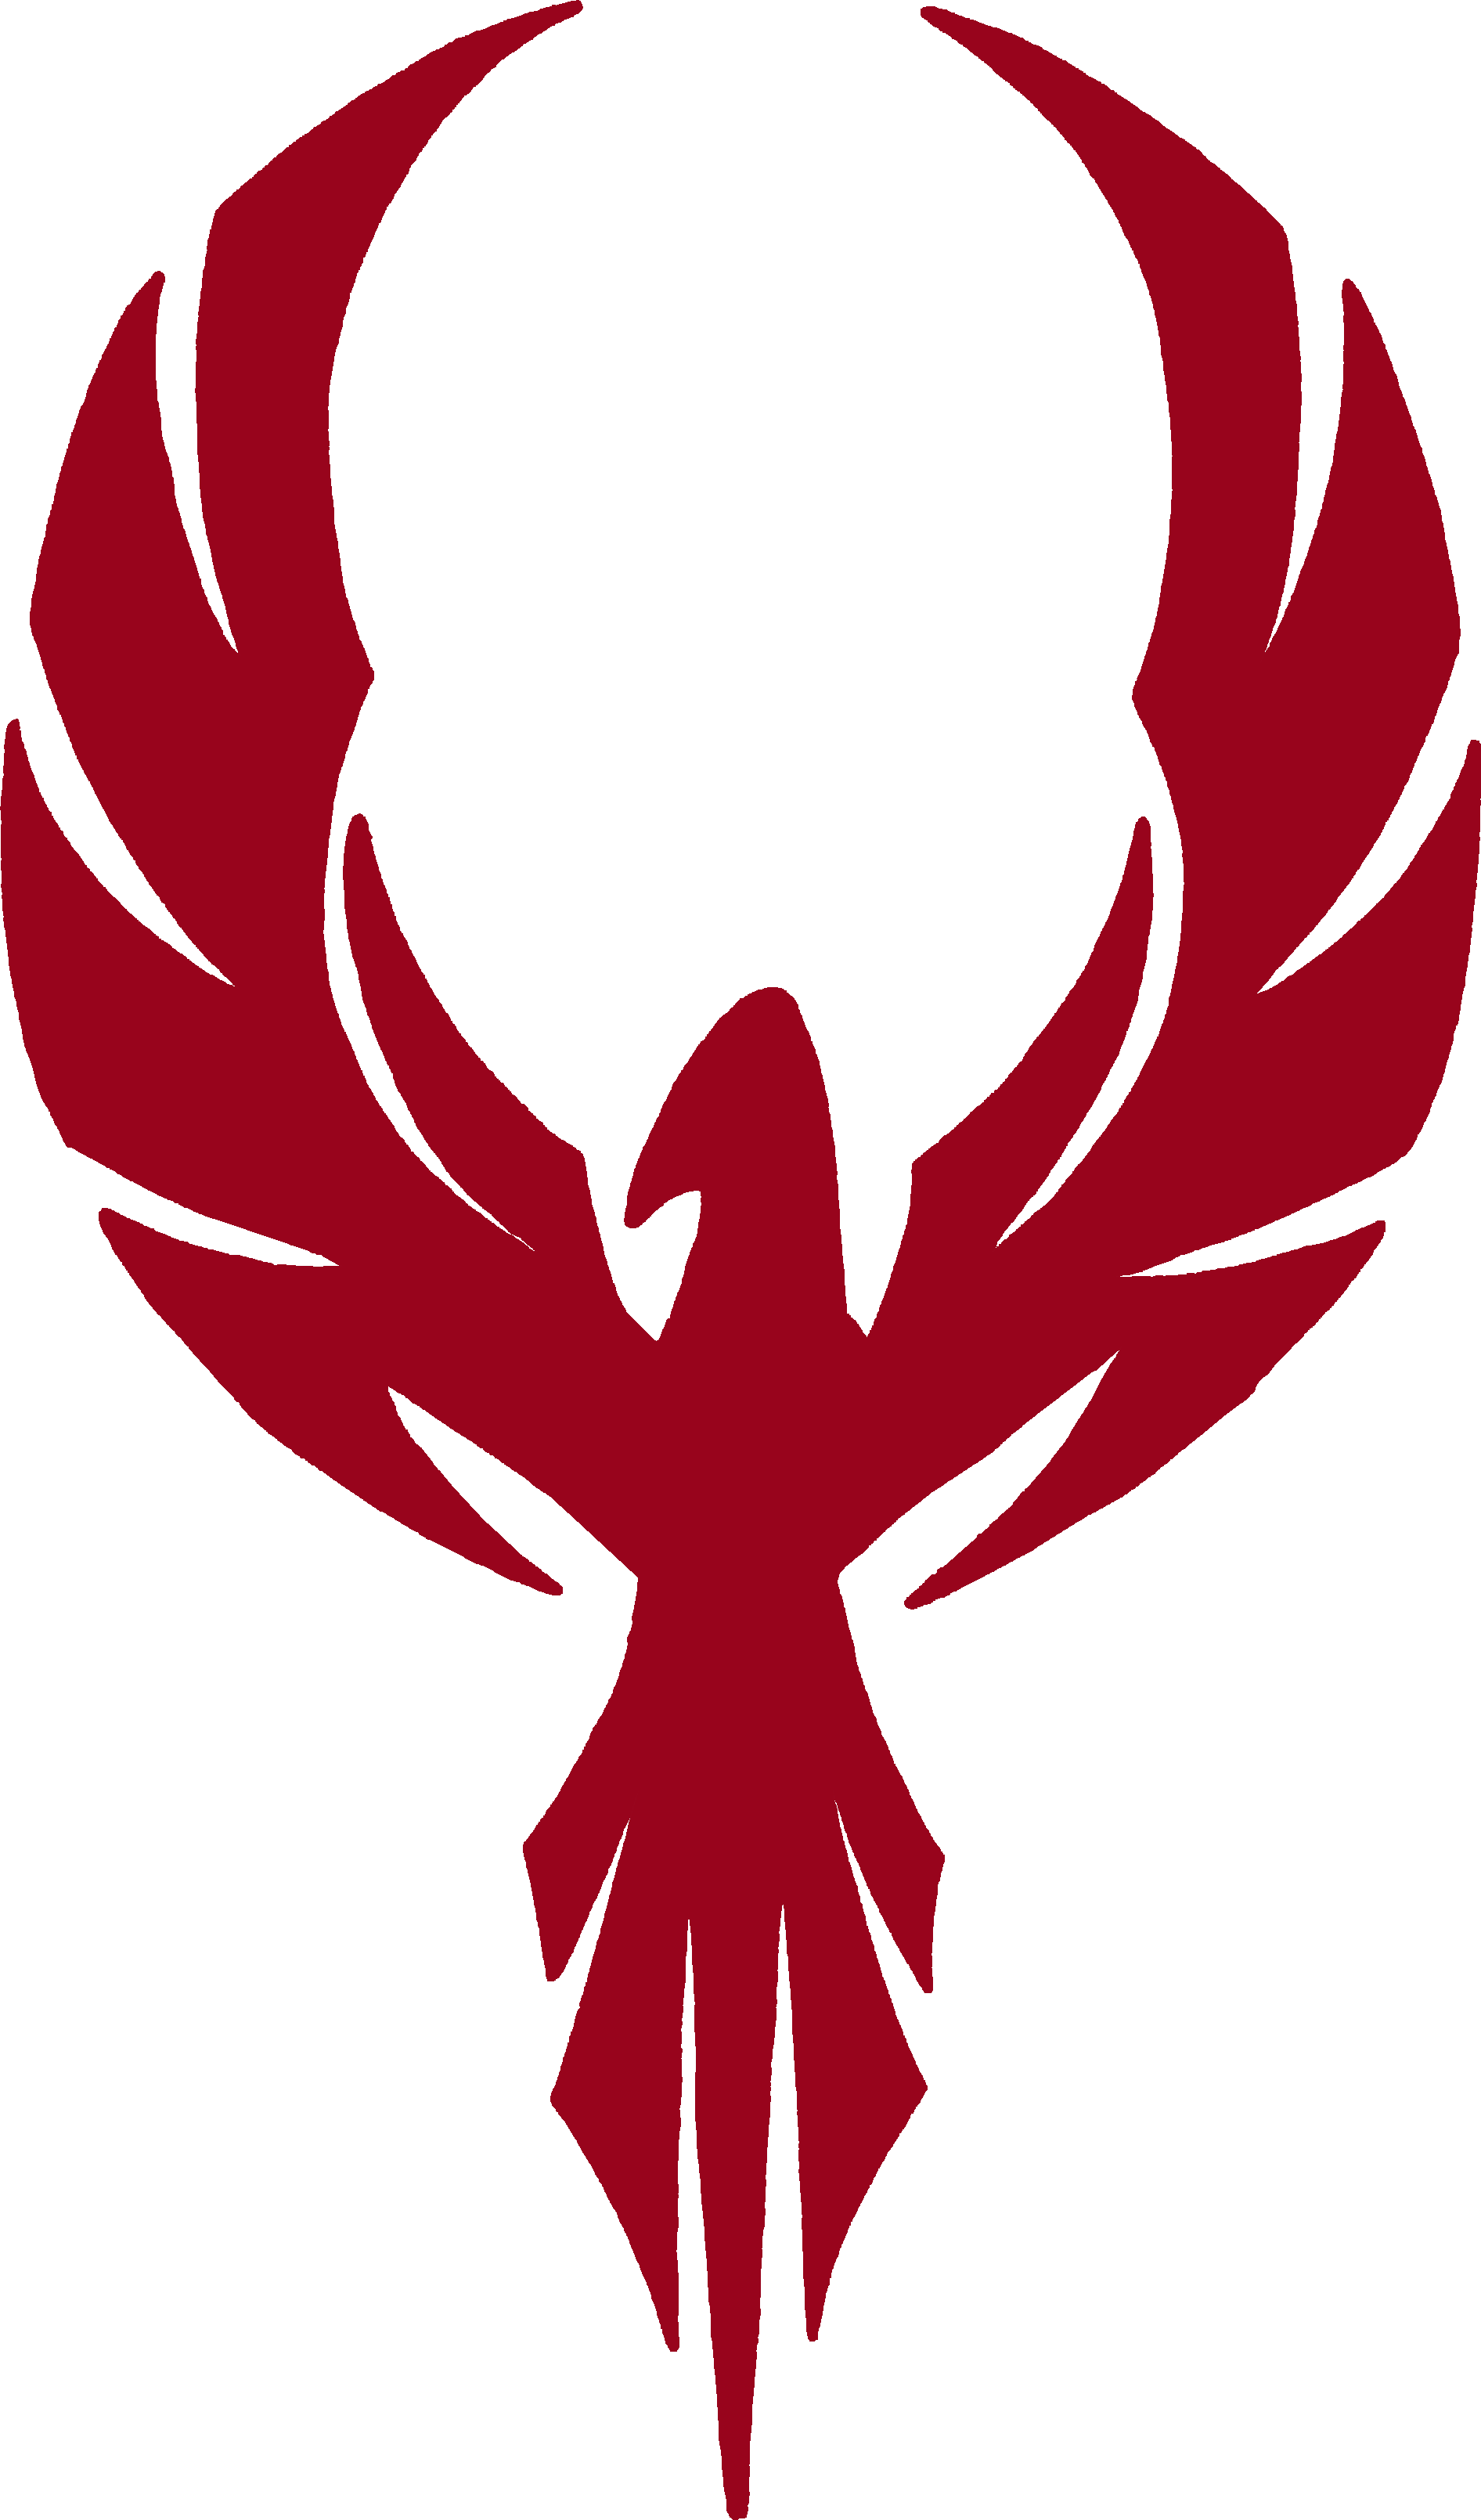 Tribal phoenix rebellion symbol. Young clipart relative